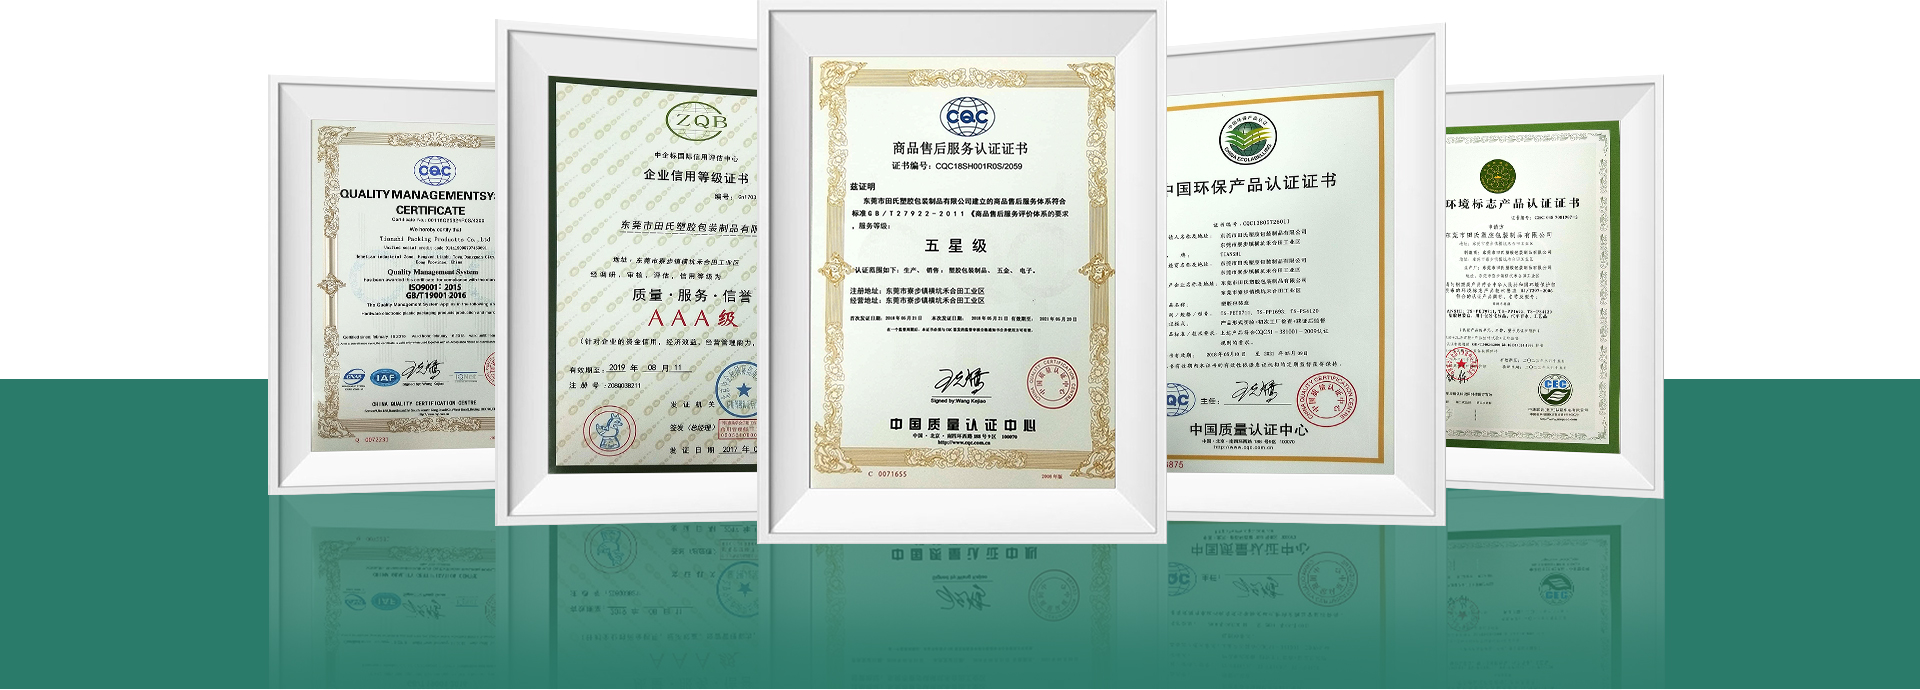 Certificate Picture